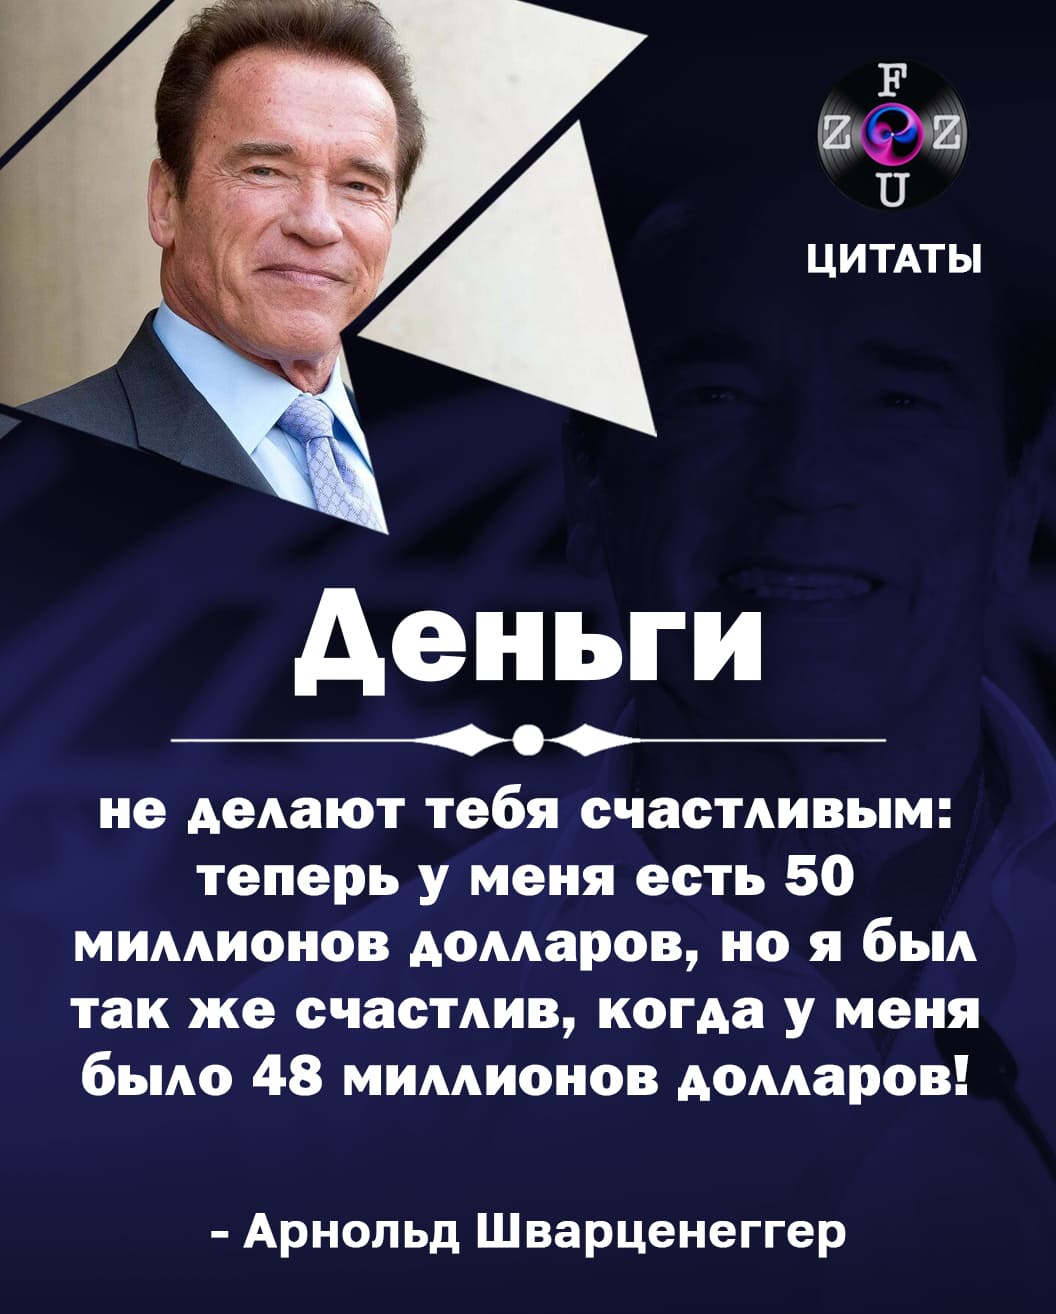 Arnold Schwarzenegger citações